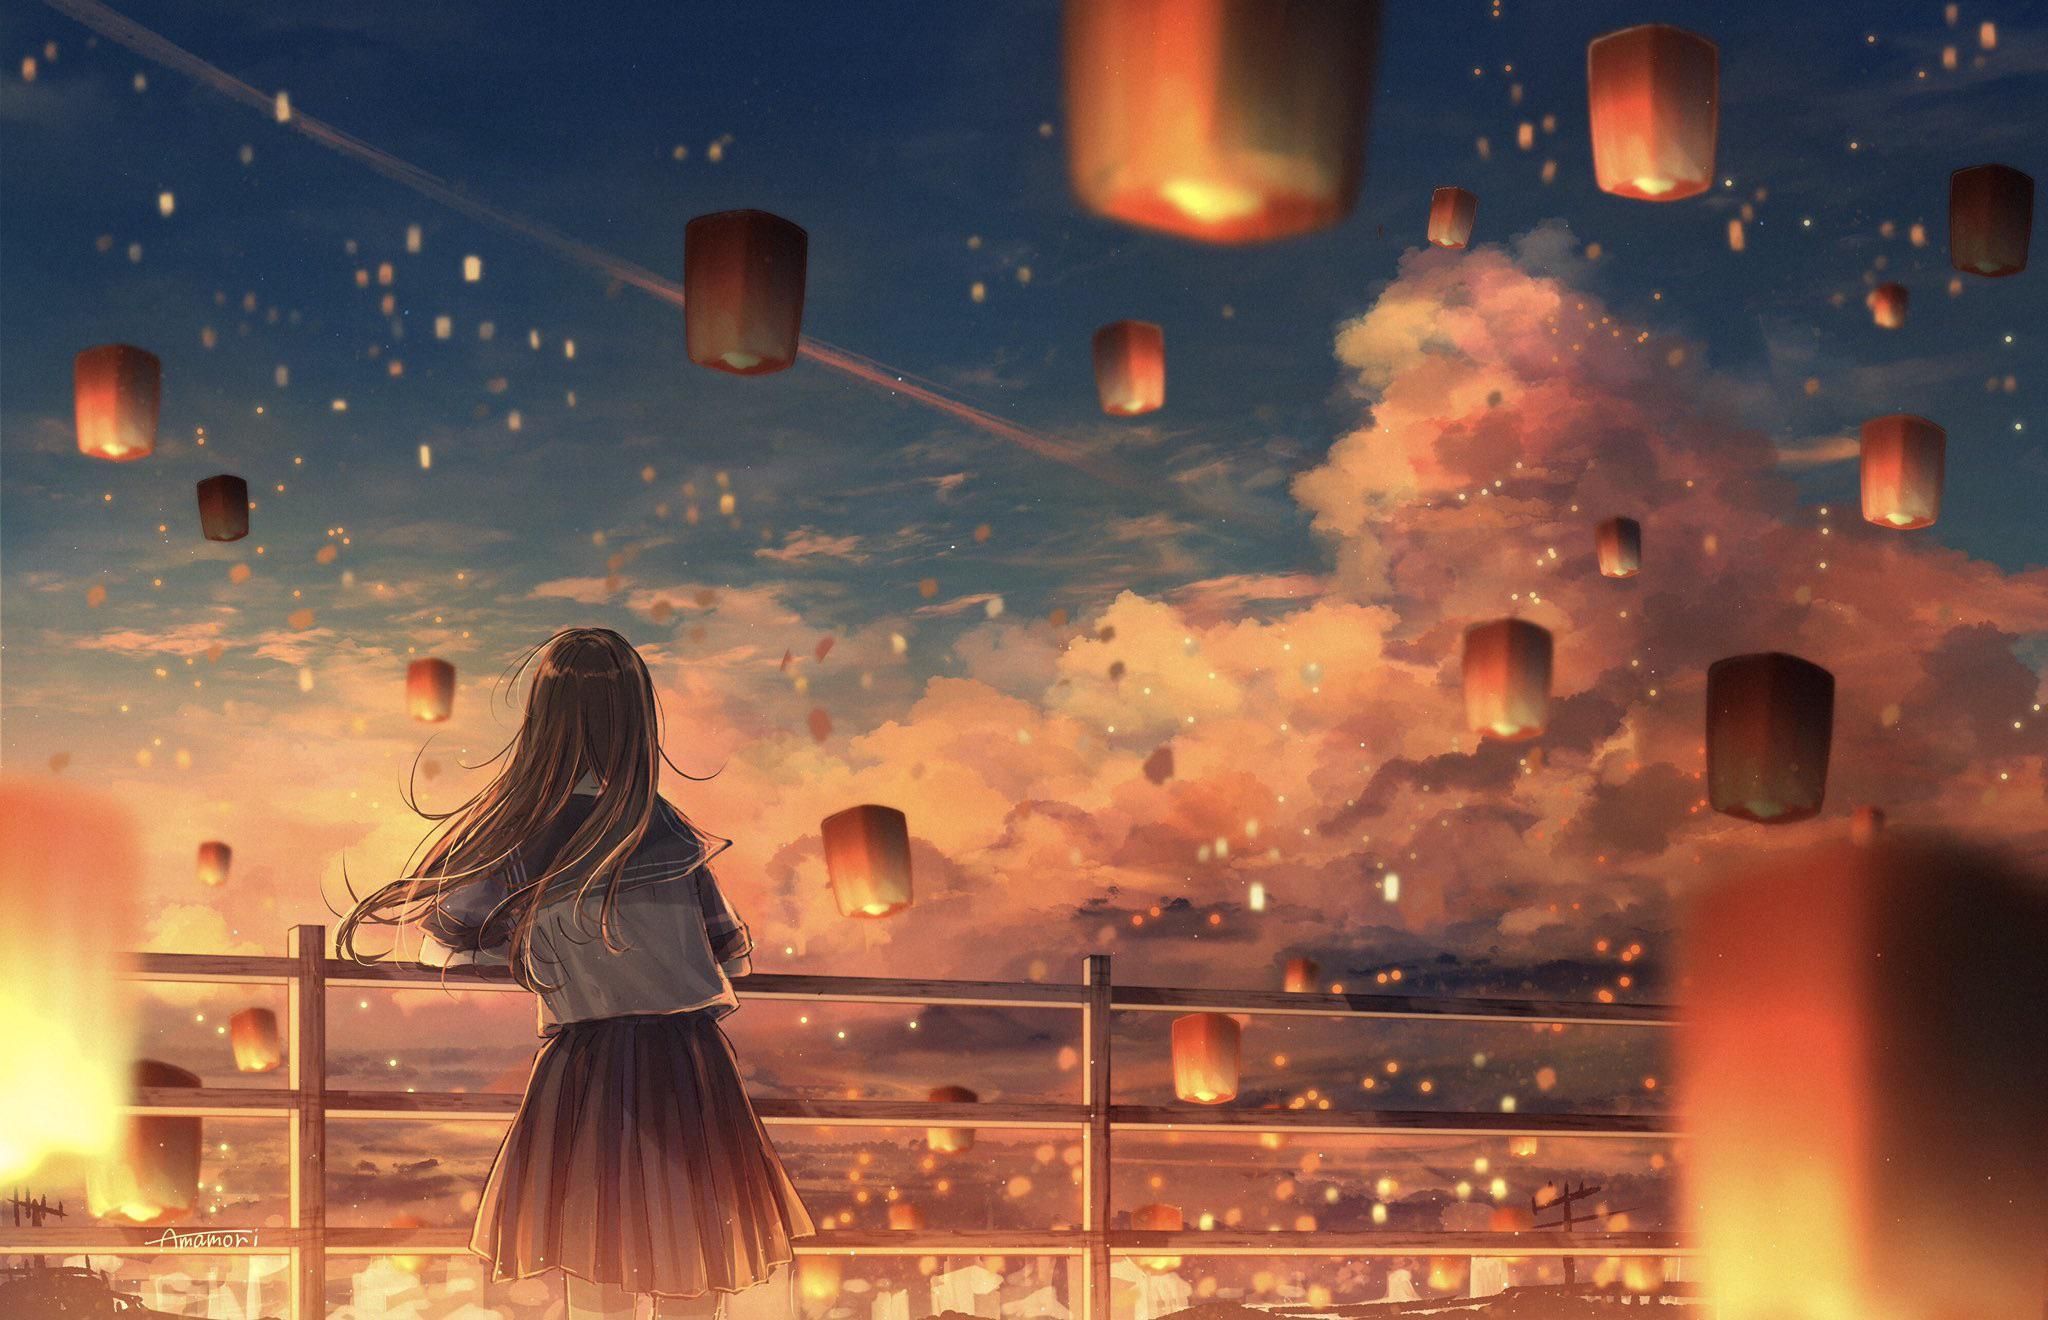 Lantern City Lights - A Dreamy Anime Artwork